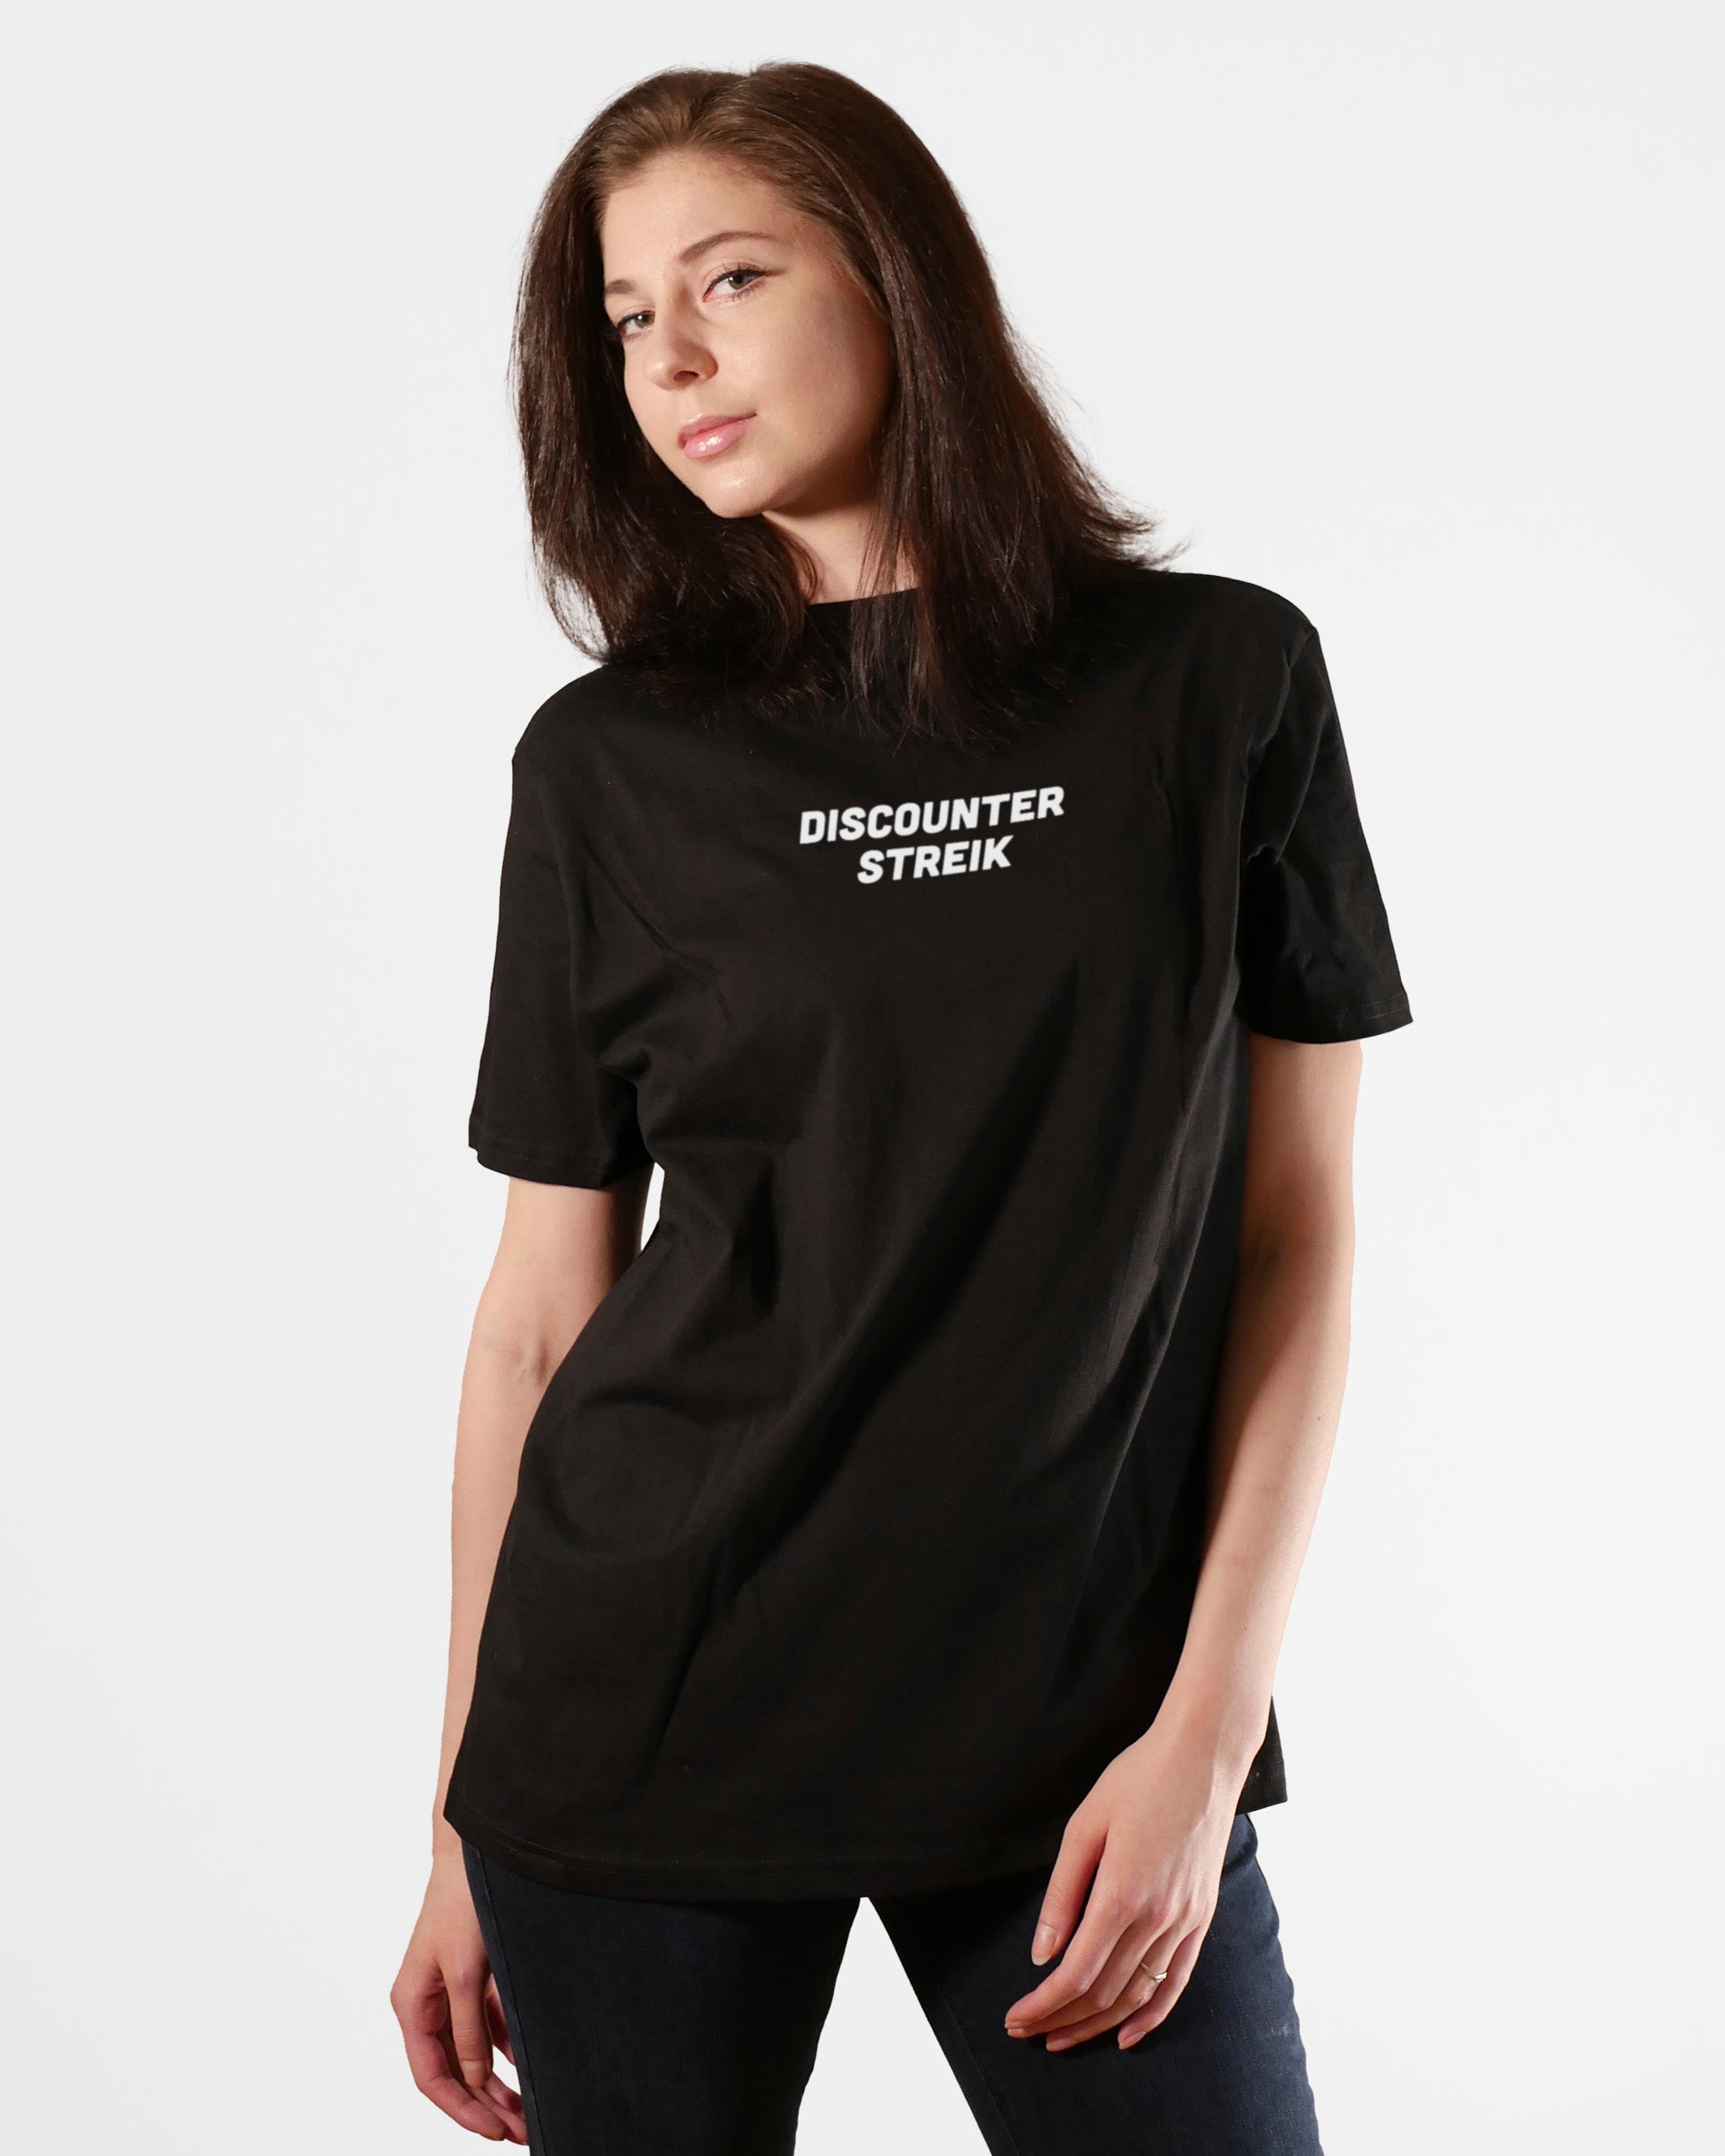 Discounter Streik | 3-Style T-Shirt